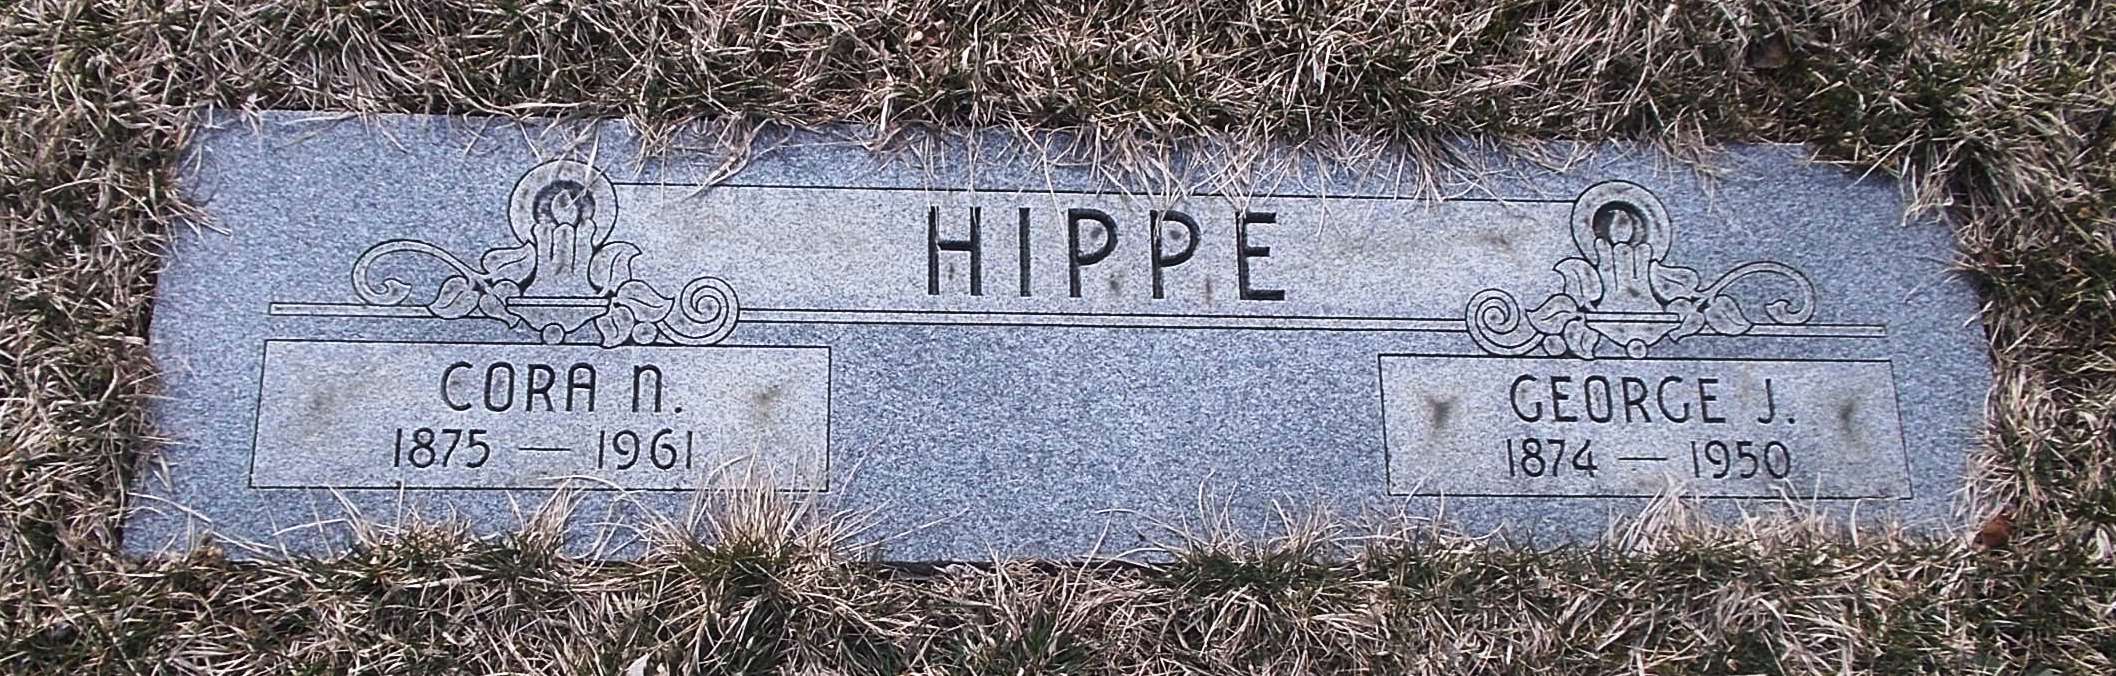 George J Hippe